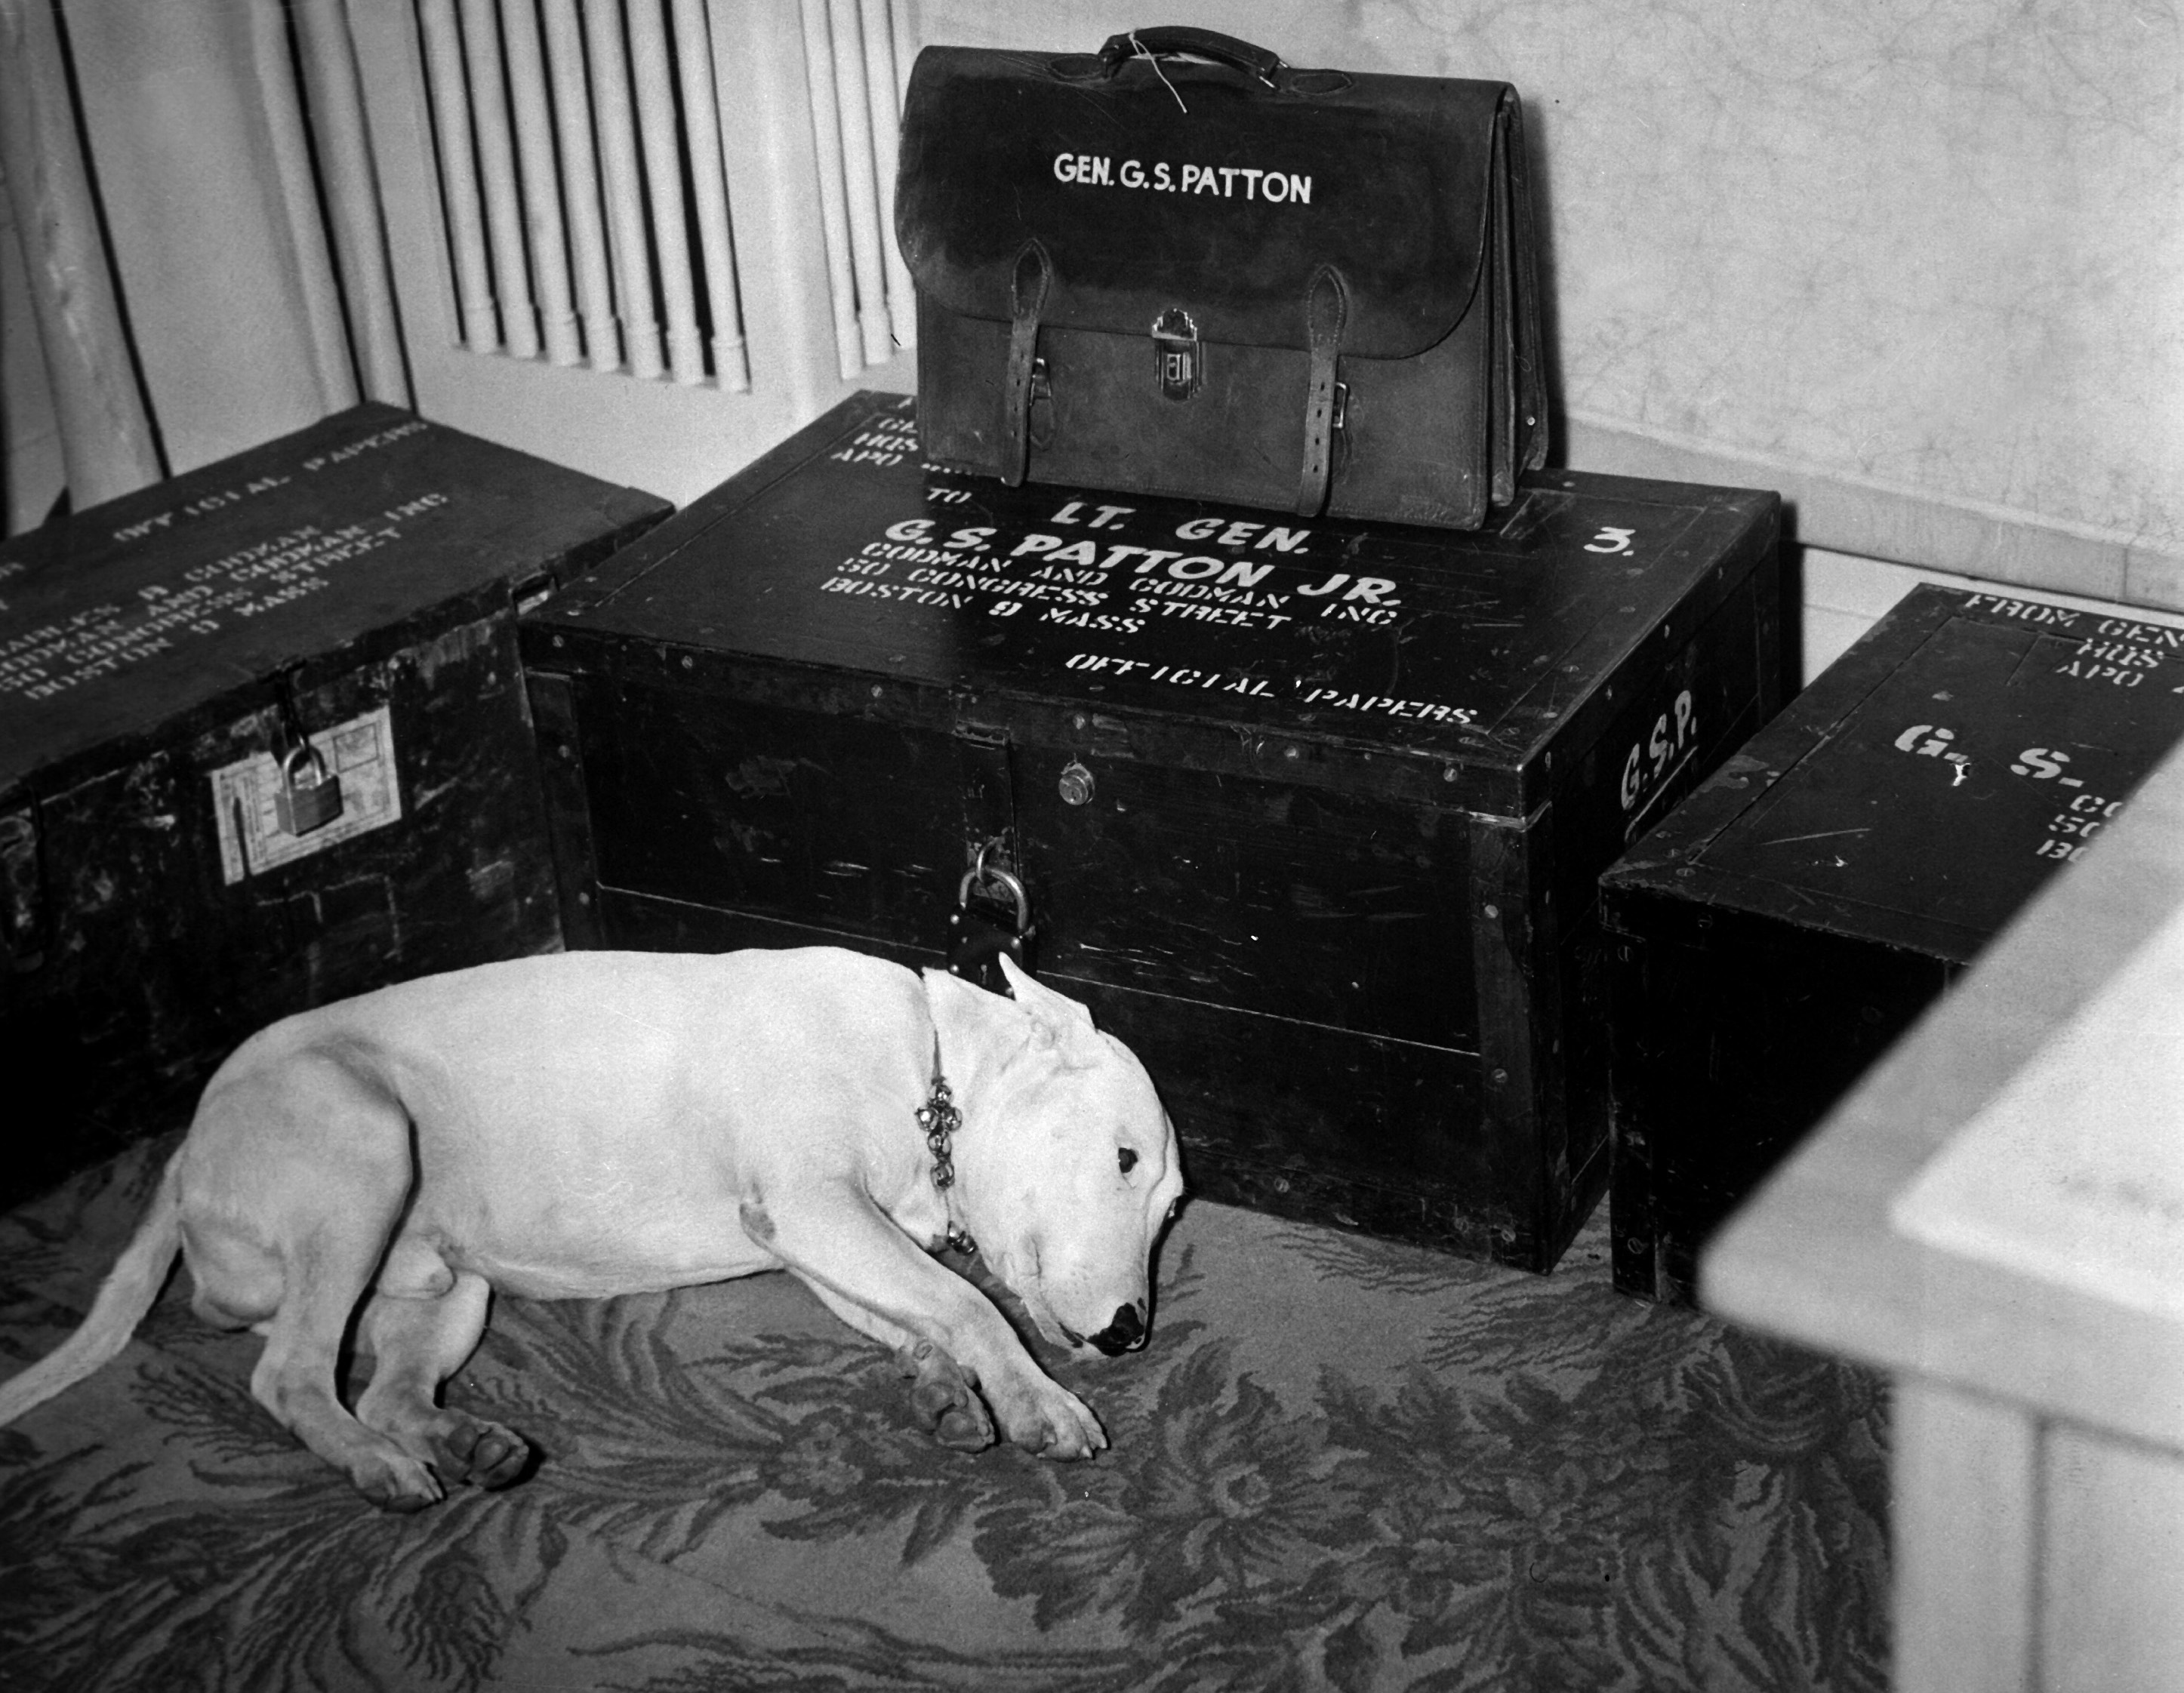 Patton's pet bull terrior Willie lying down next to his deceased master's boxed belongings, Bad Nauheim, Germany, Jan 1946